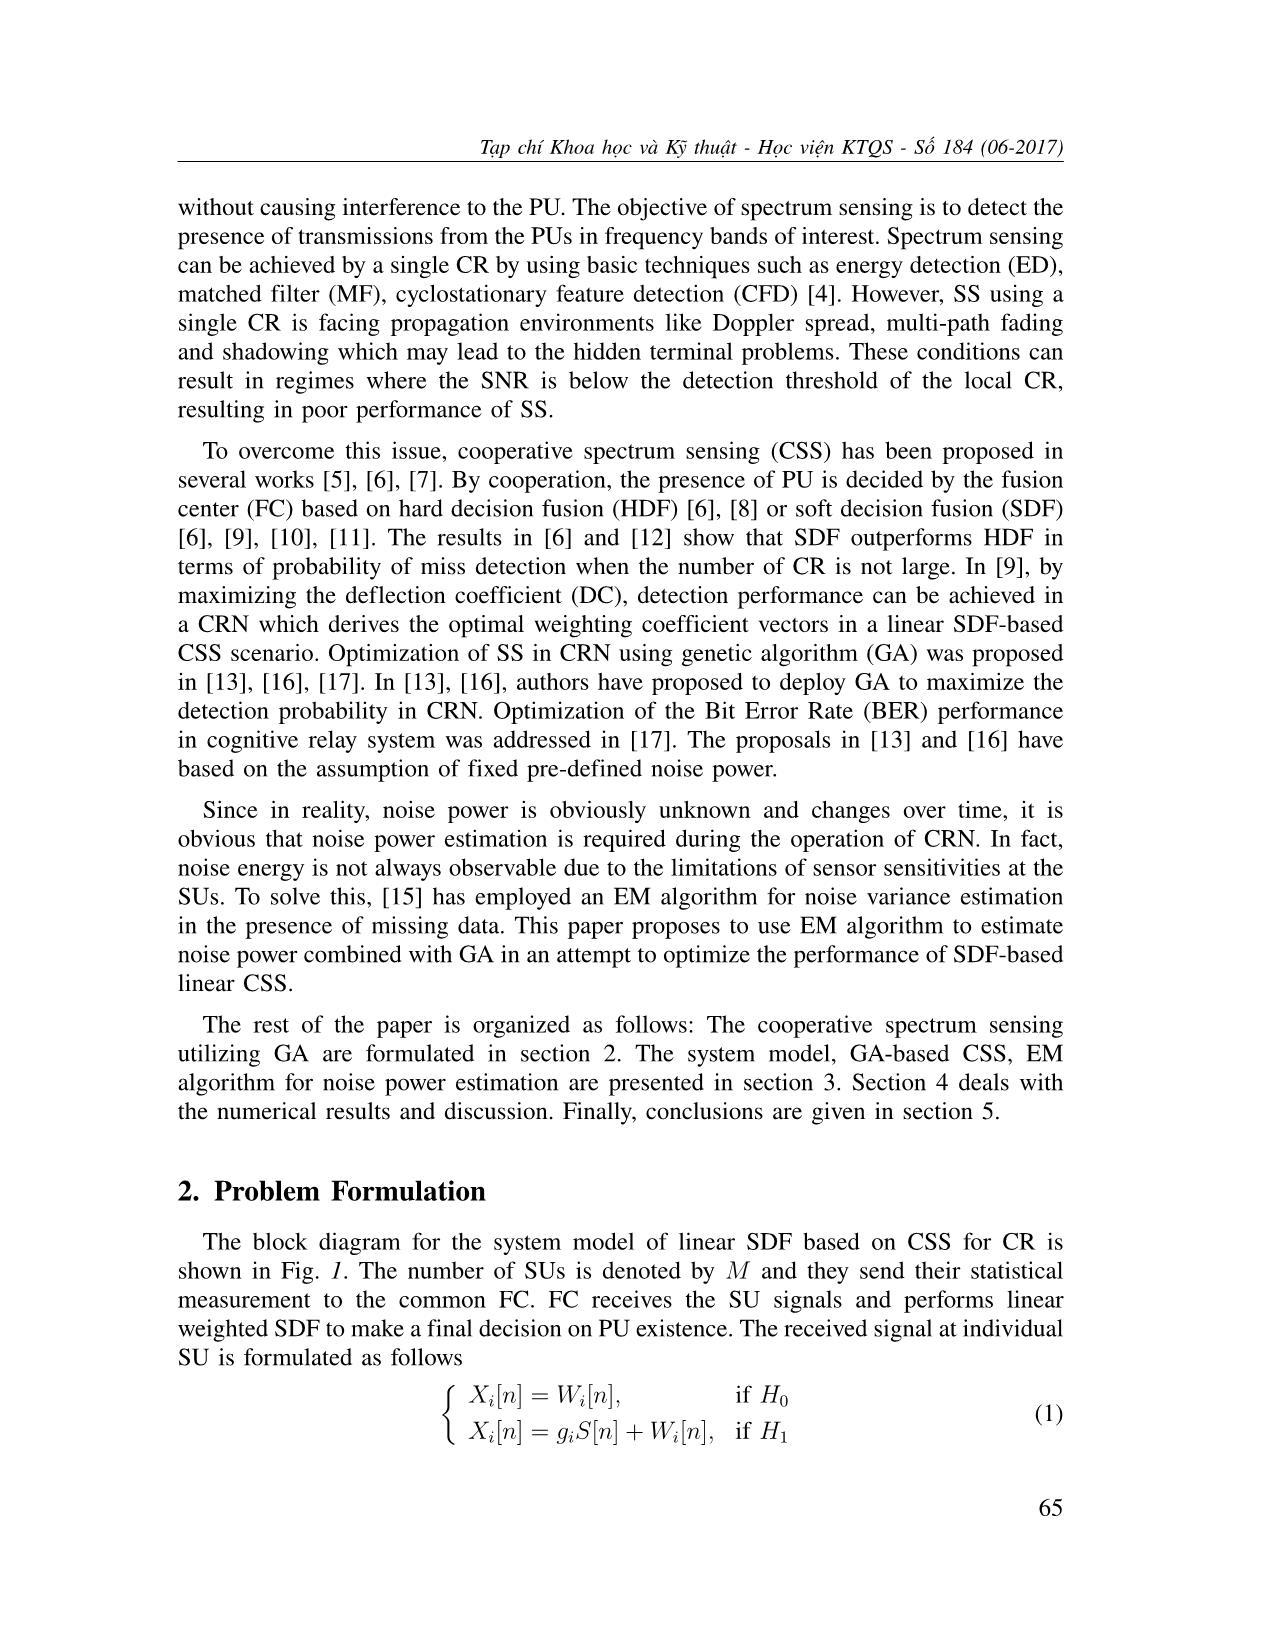 Enhancement of cooperative spectrum sensing employing genetic algorithm and noise power estimation trang 2